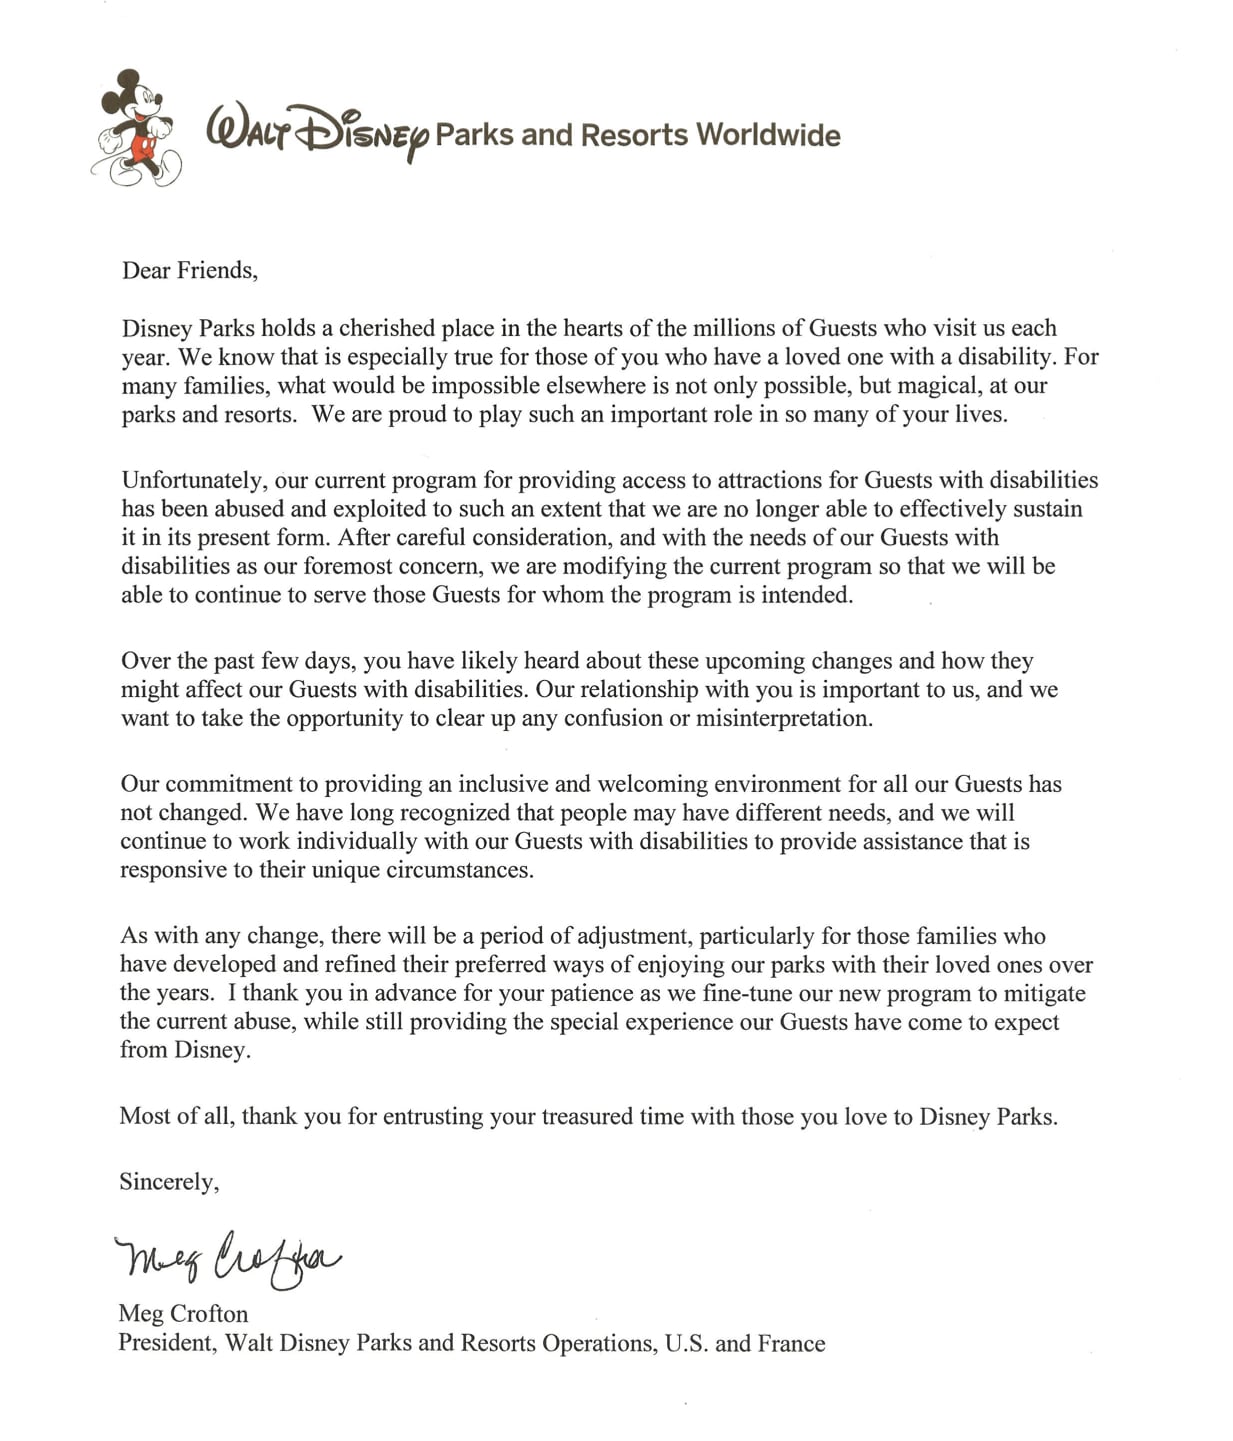 Letter from Meg Crofton, President, Walt Disney Parks and Resorts Operations